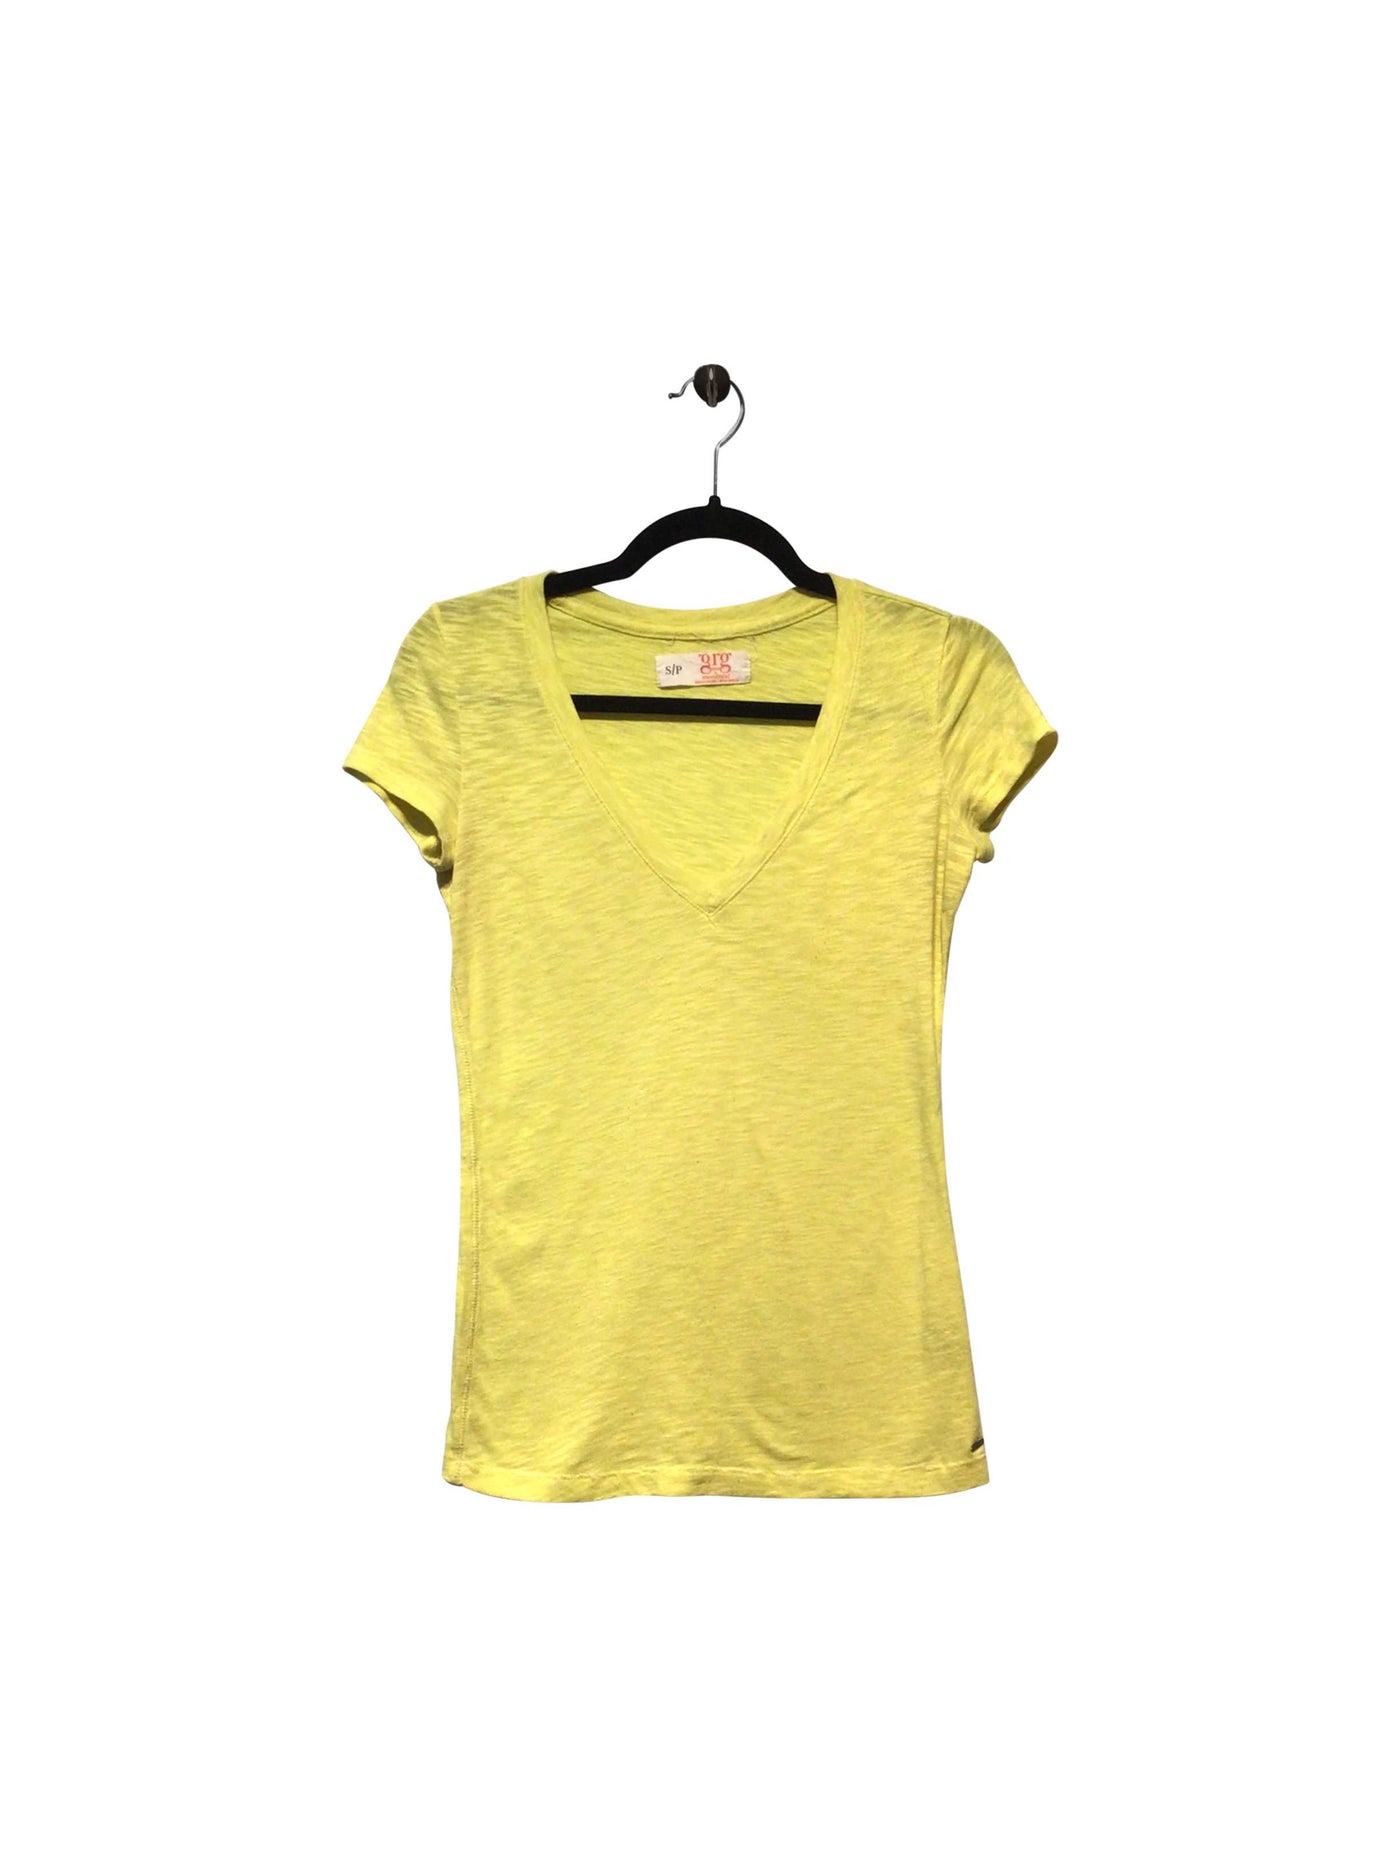 GRG Regular fit T-shirt in Yellow  -  S  7.99 Koop